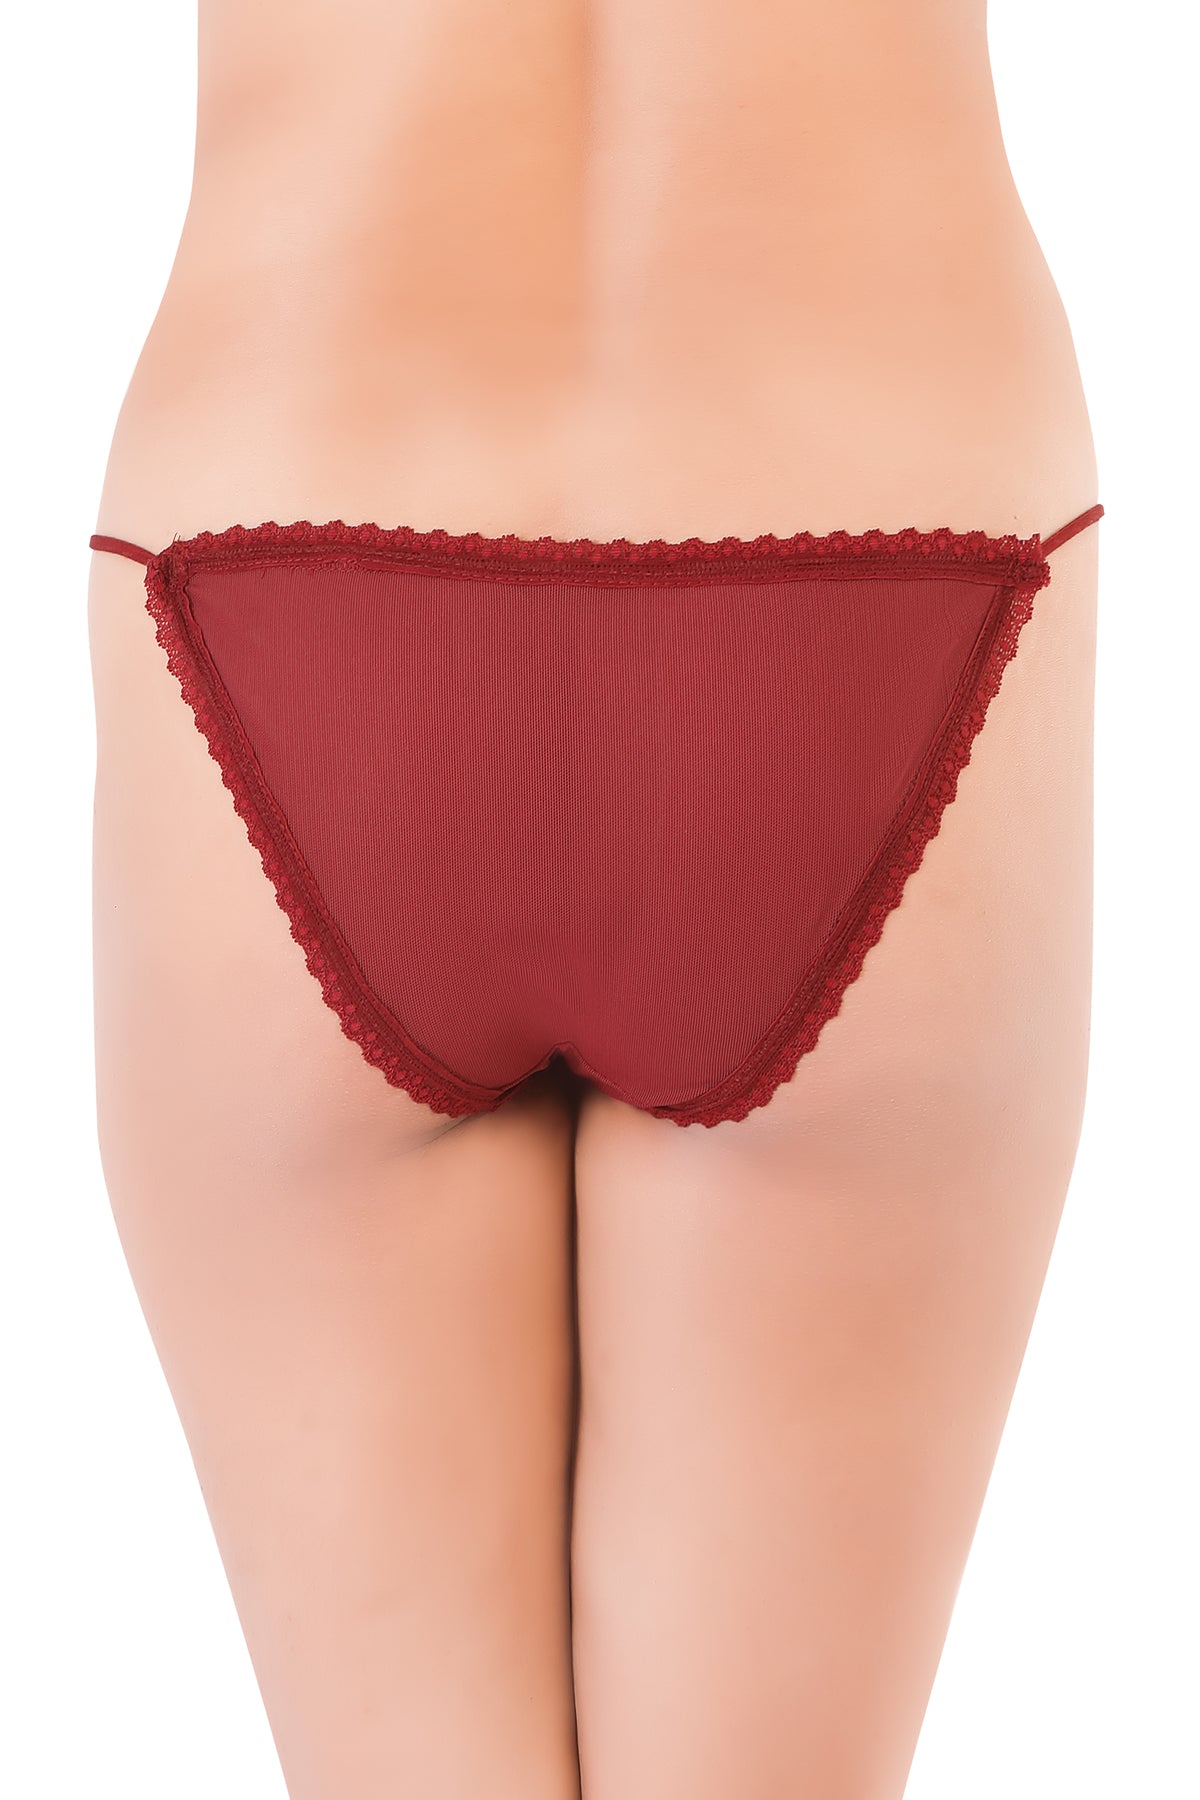 Ladies Nylon Cheekini Panty at Rs 450/piece